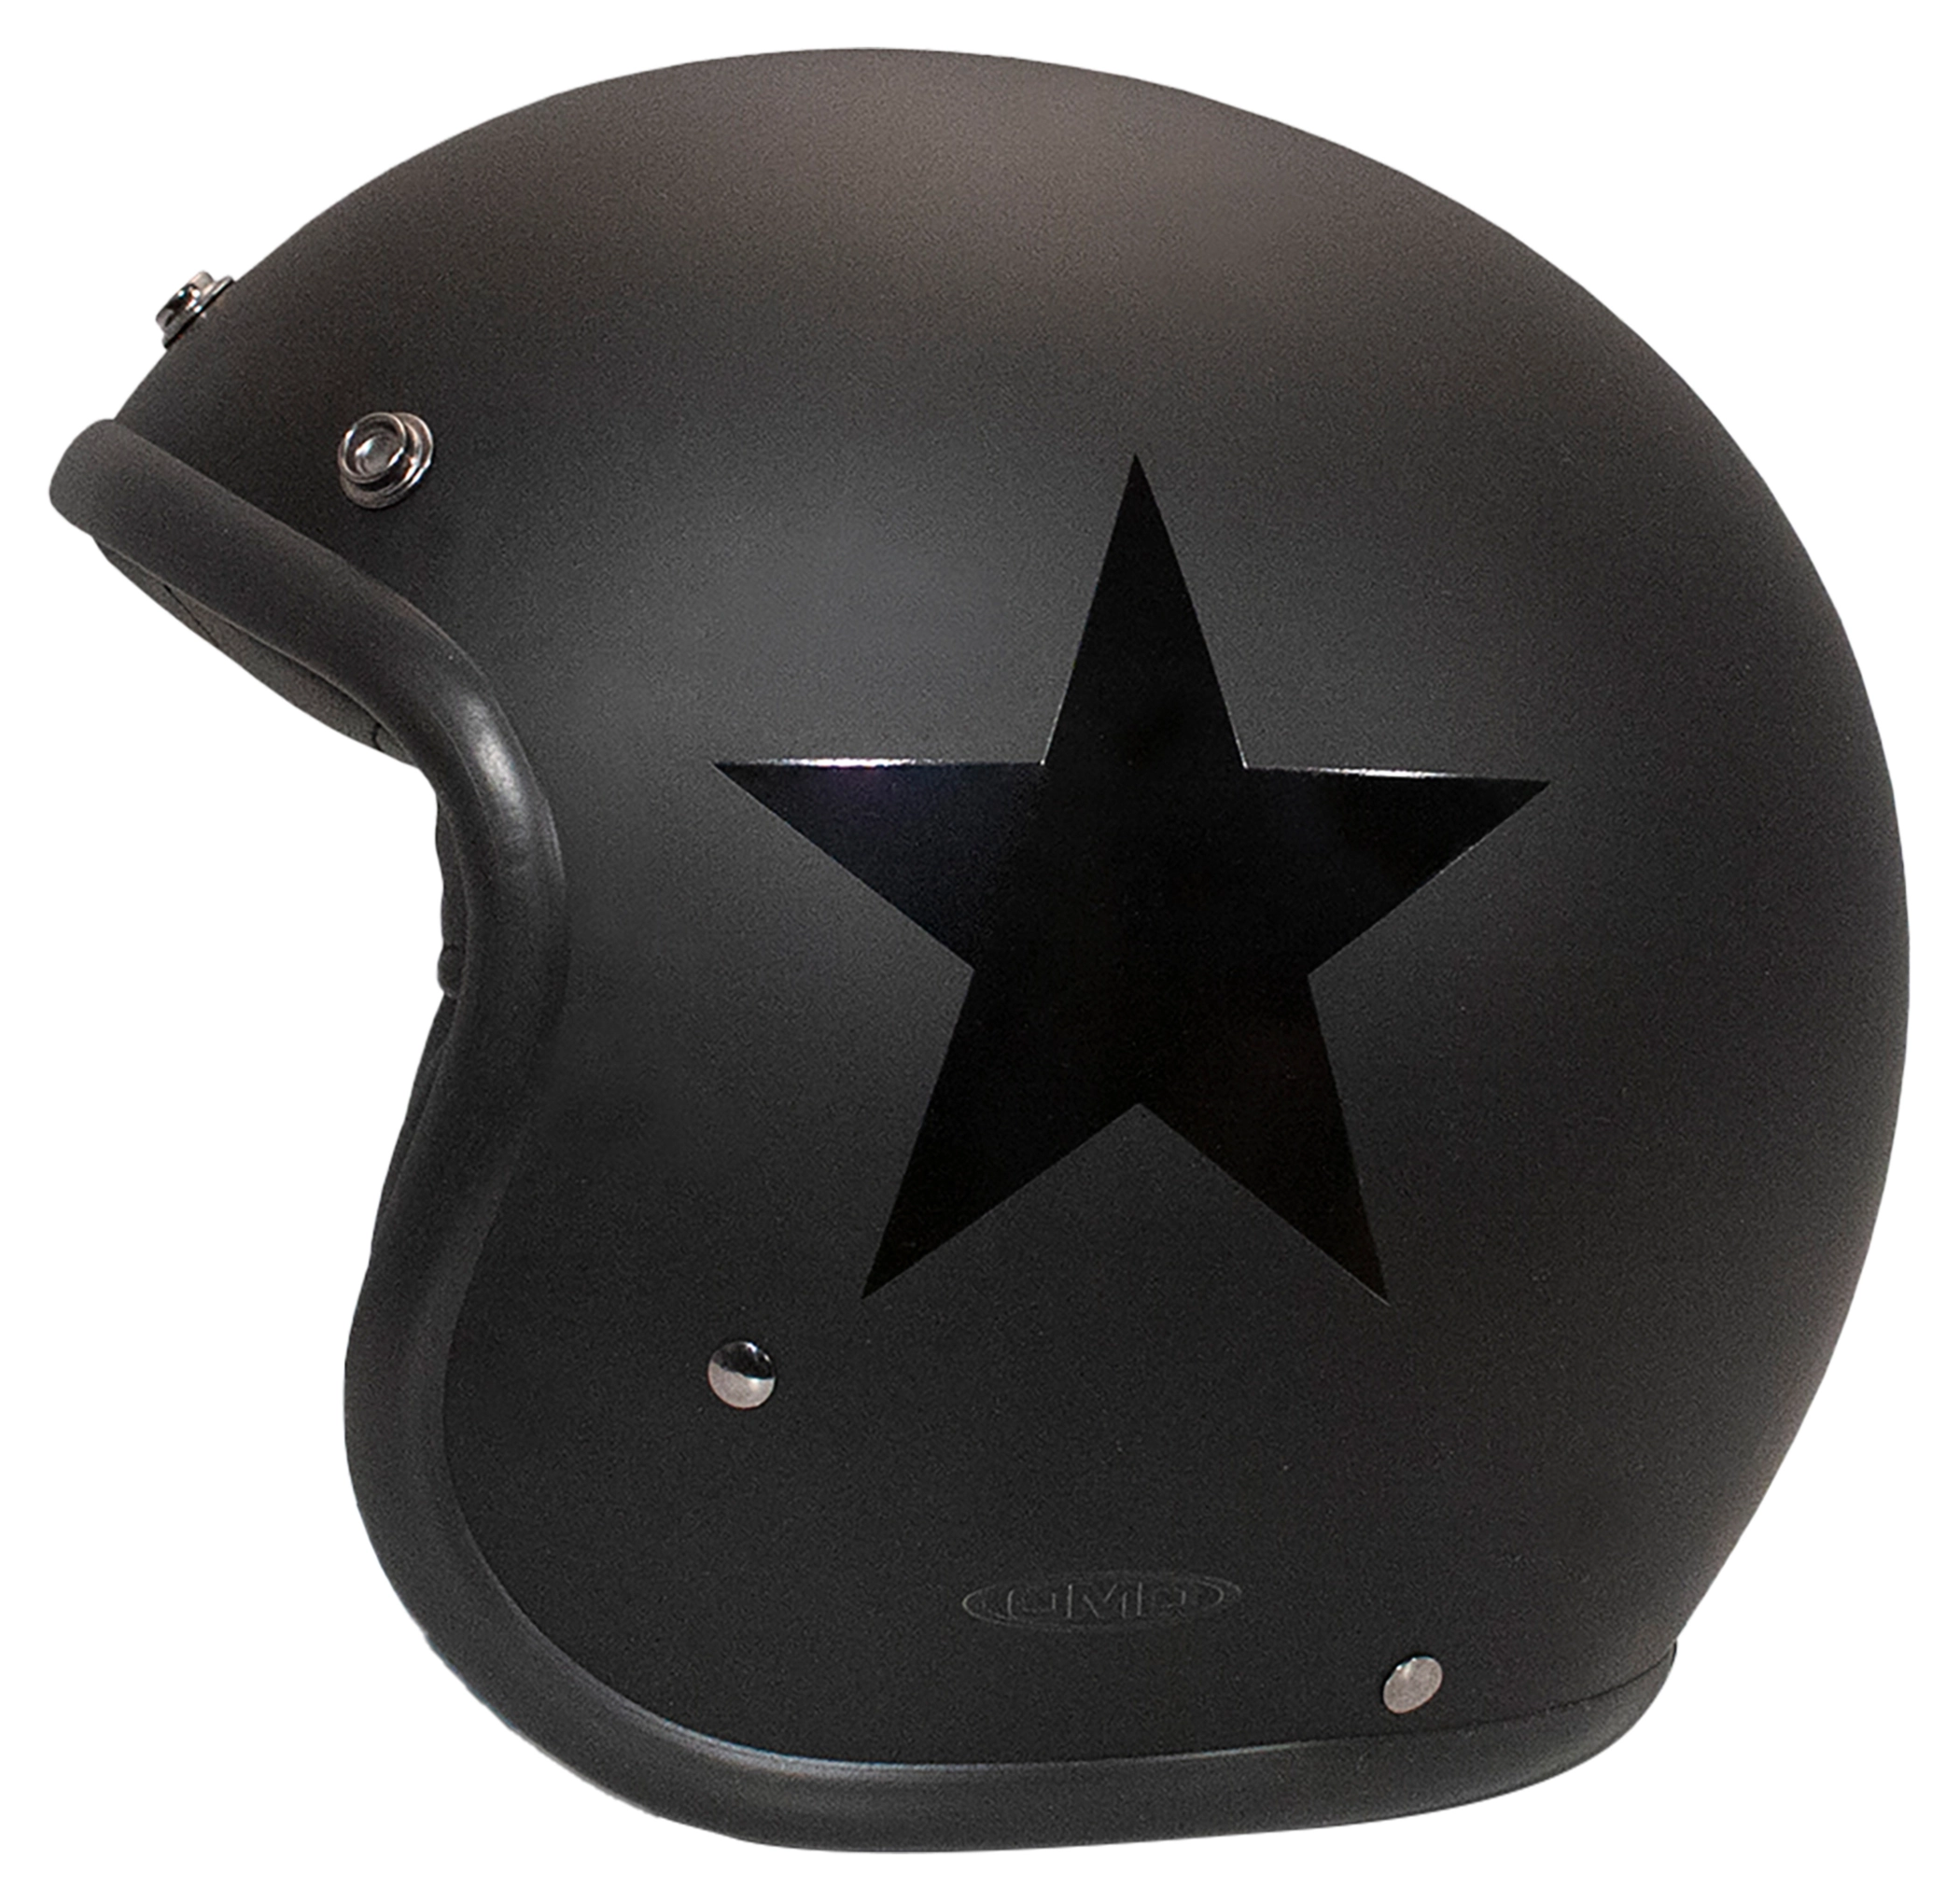 Cascos de moto vintage - DMD Helmets